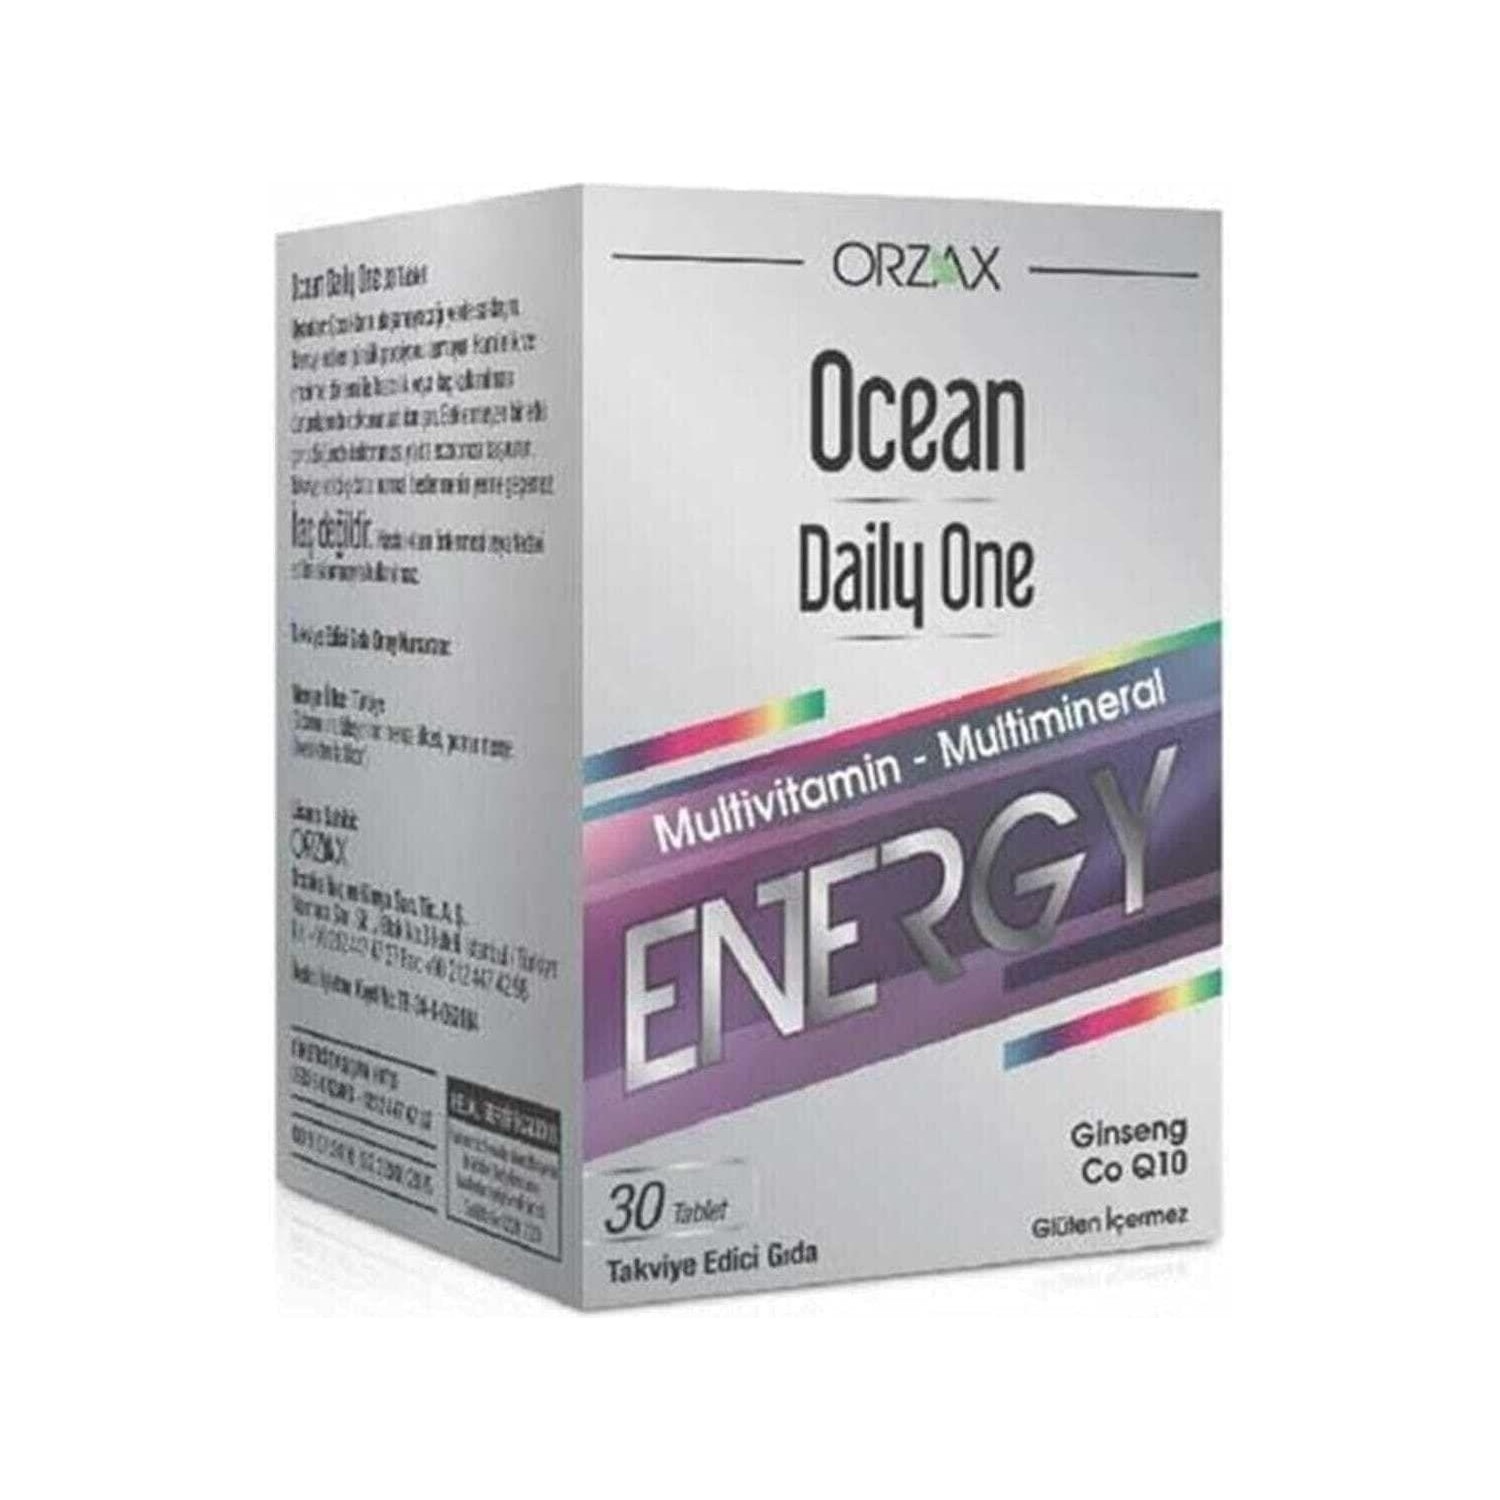 Пищевая добавка Orzax Ocean Daily One Energy, 30 таблеток